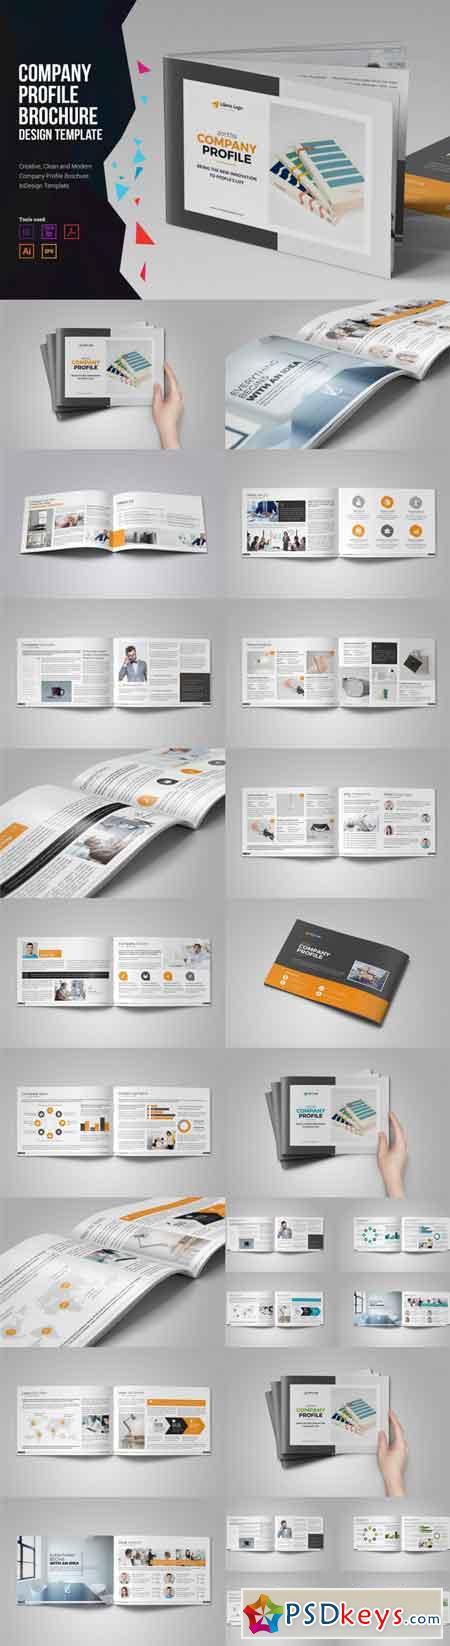 Company Profile Brochure v4 3475147